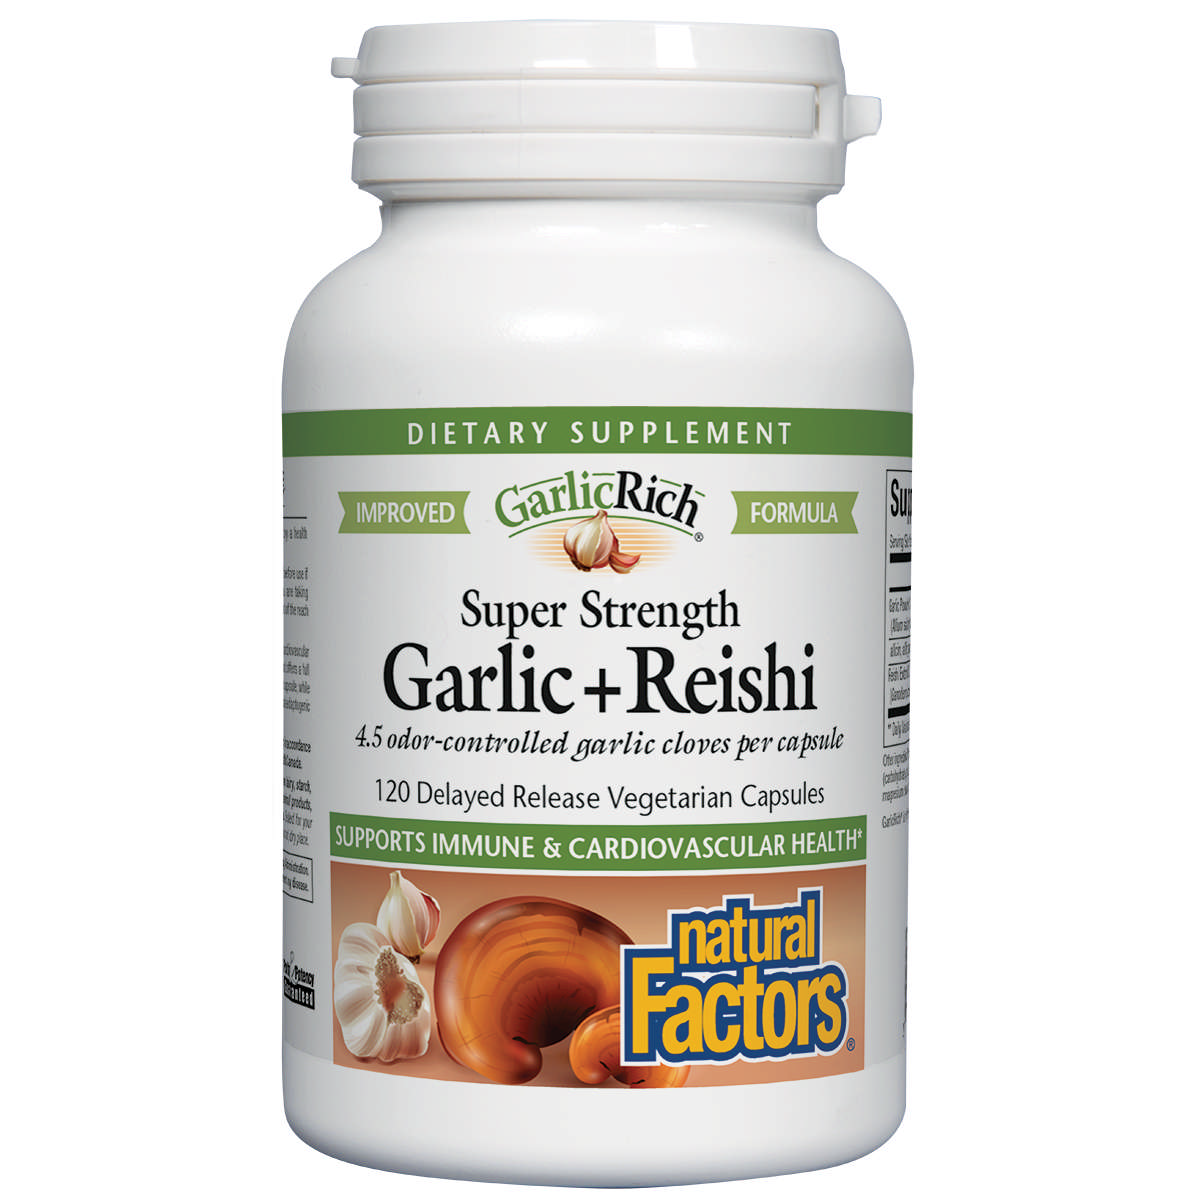 Natural Factors - Garlic + Reishi Garlicrich